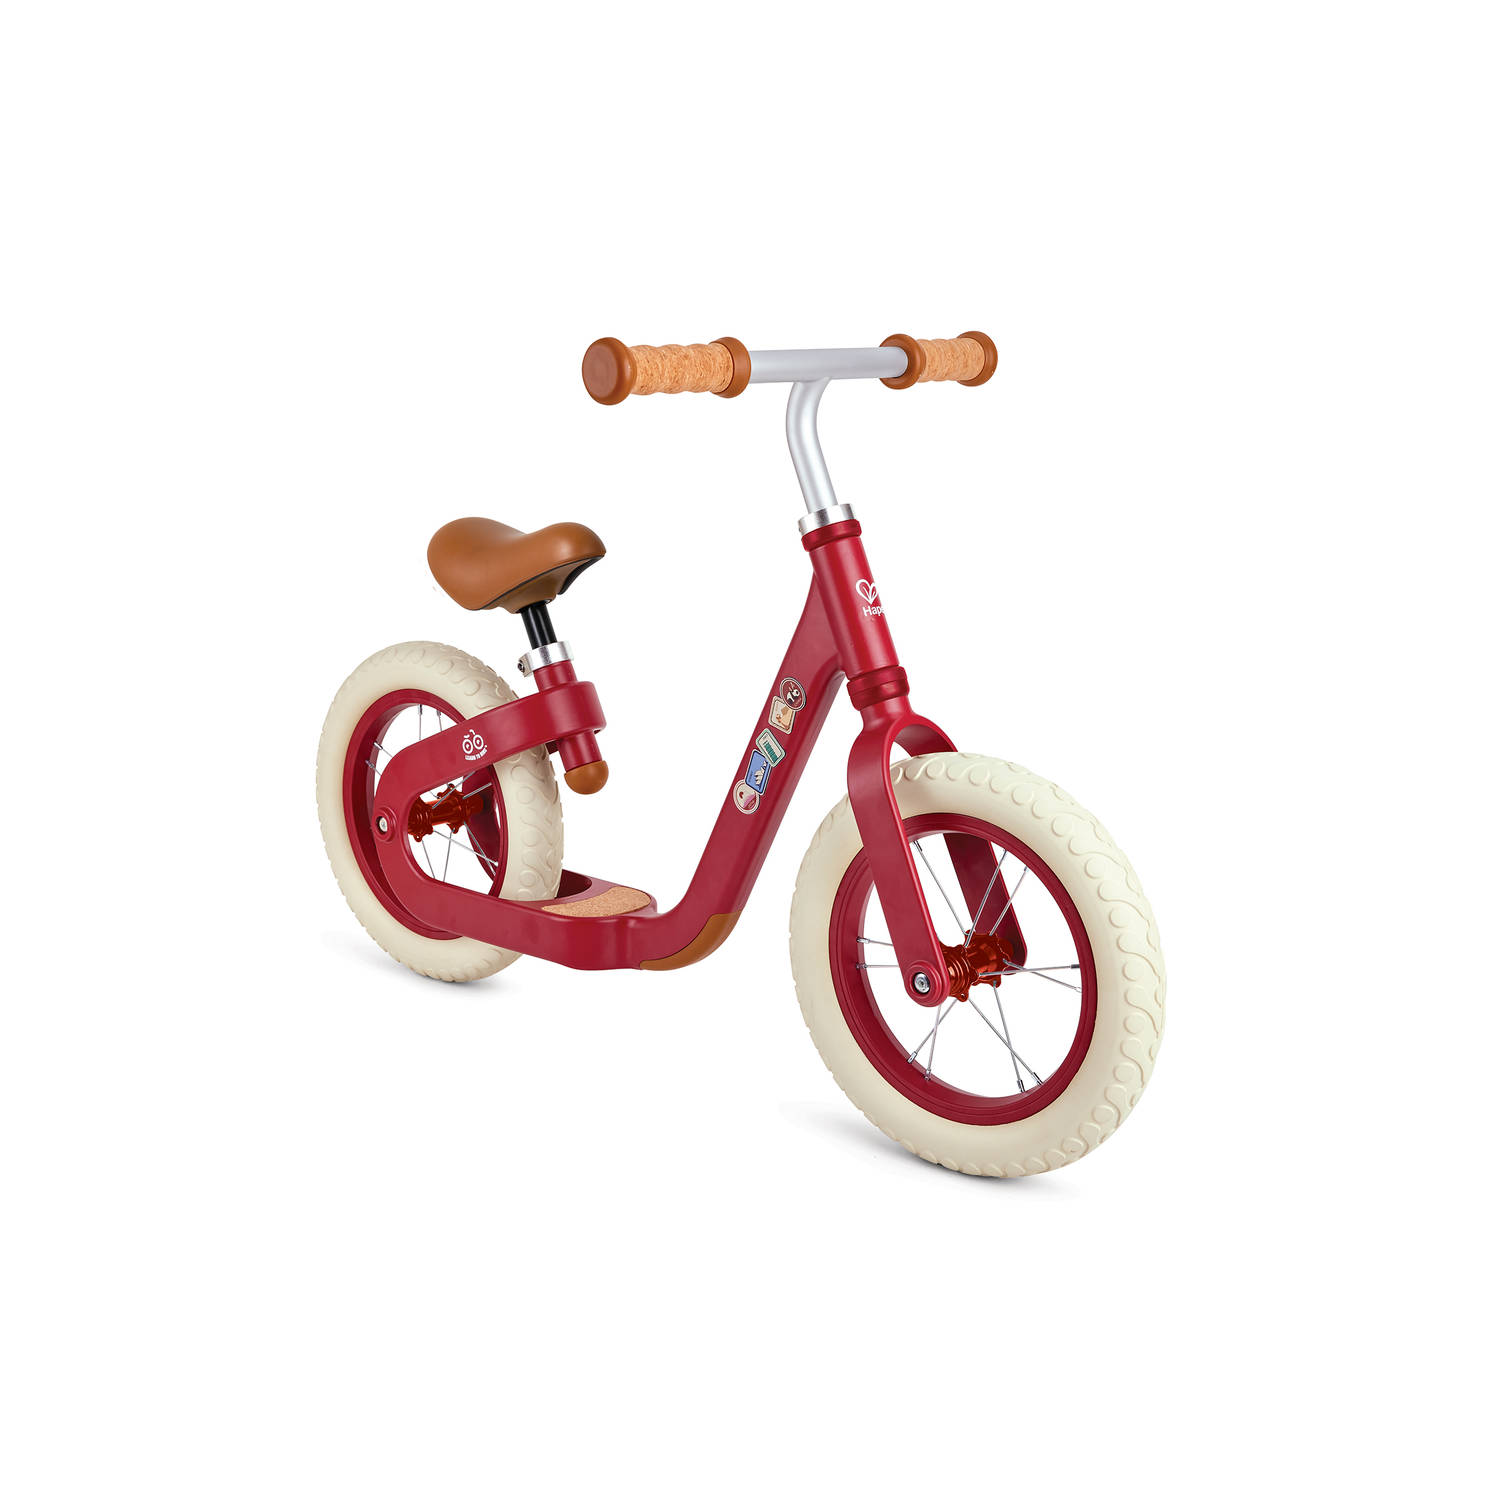 Hape Learn to Ride Balance Bike, red